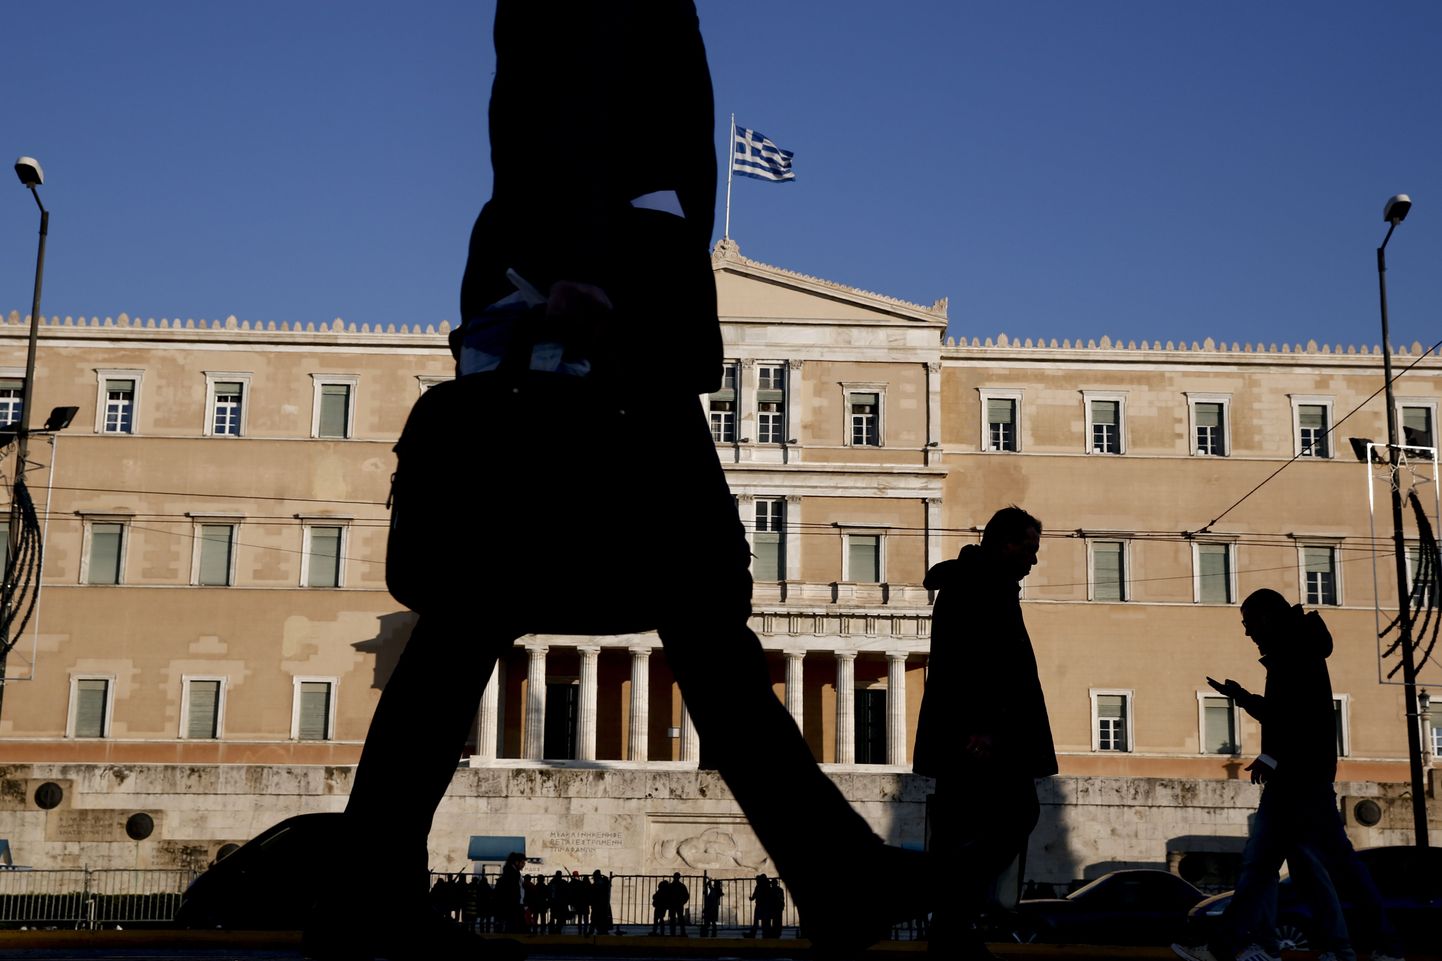 Kreeka parlament Ateenas.